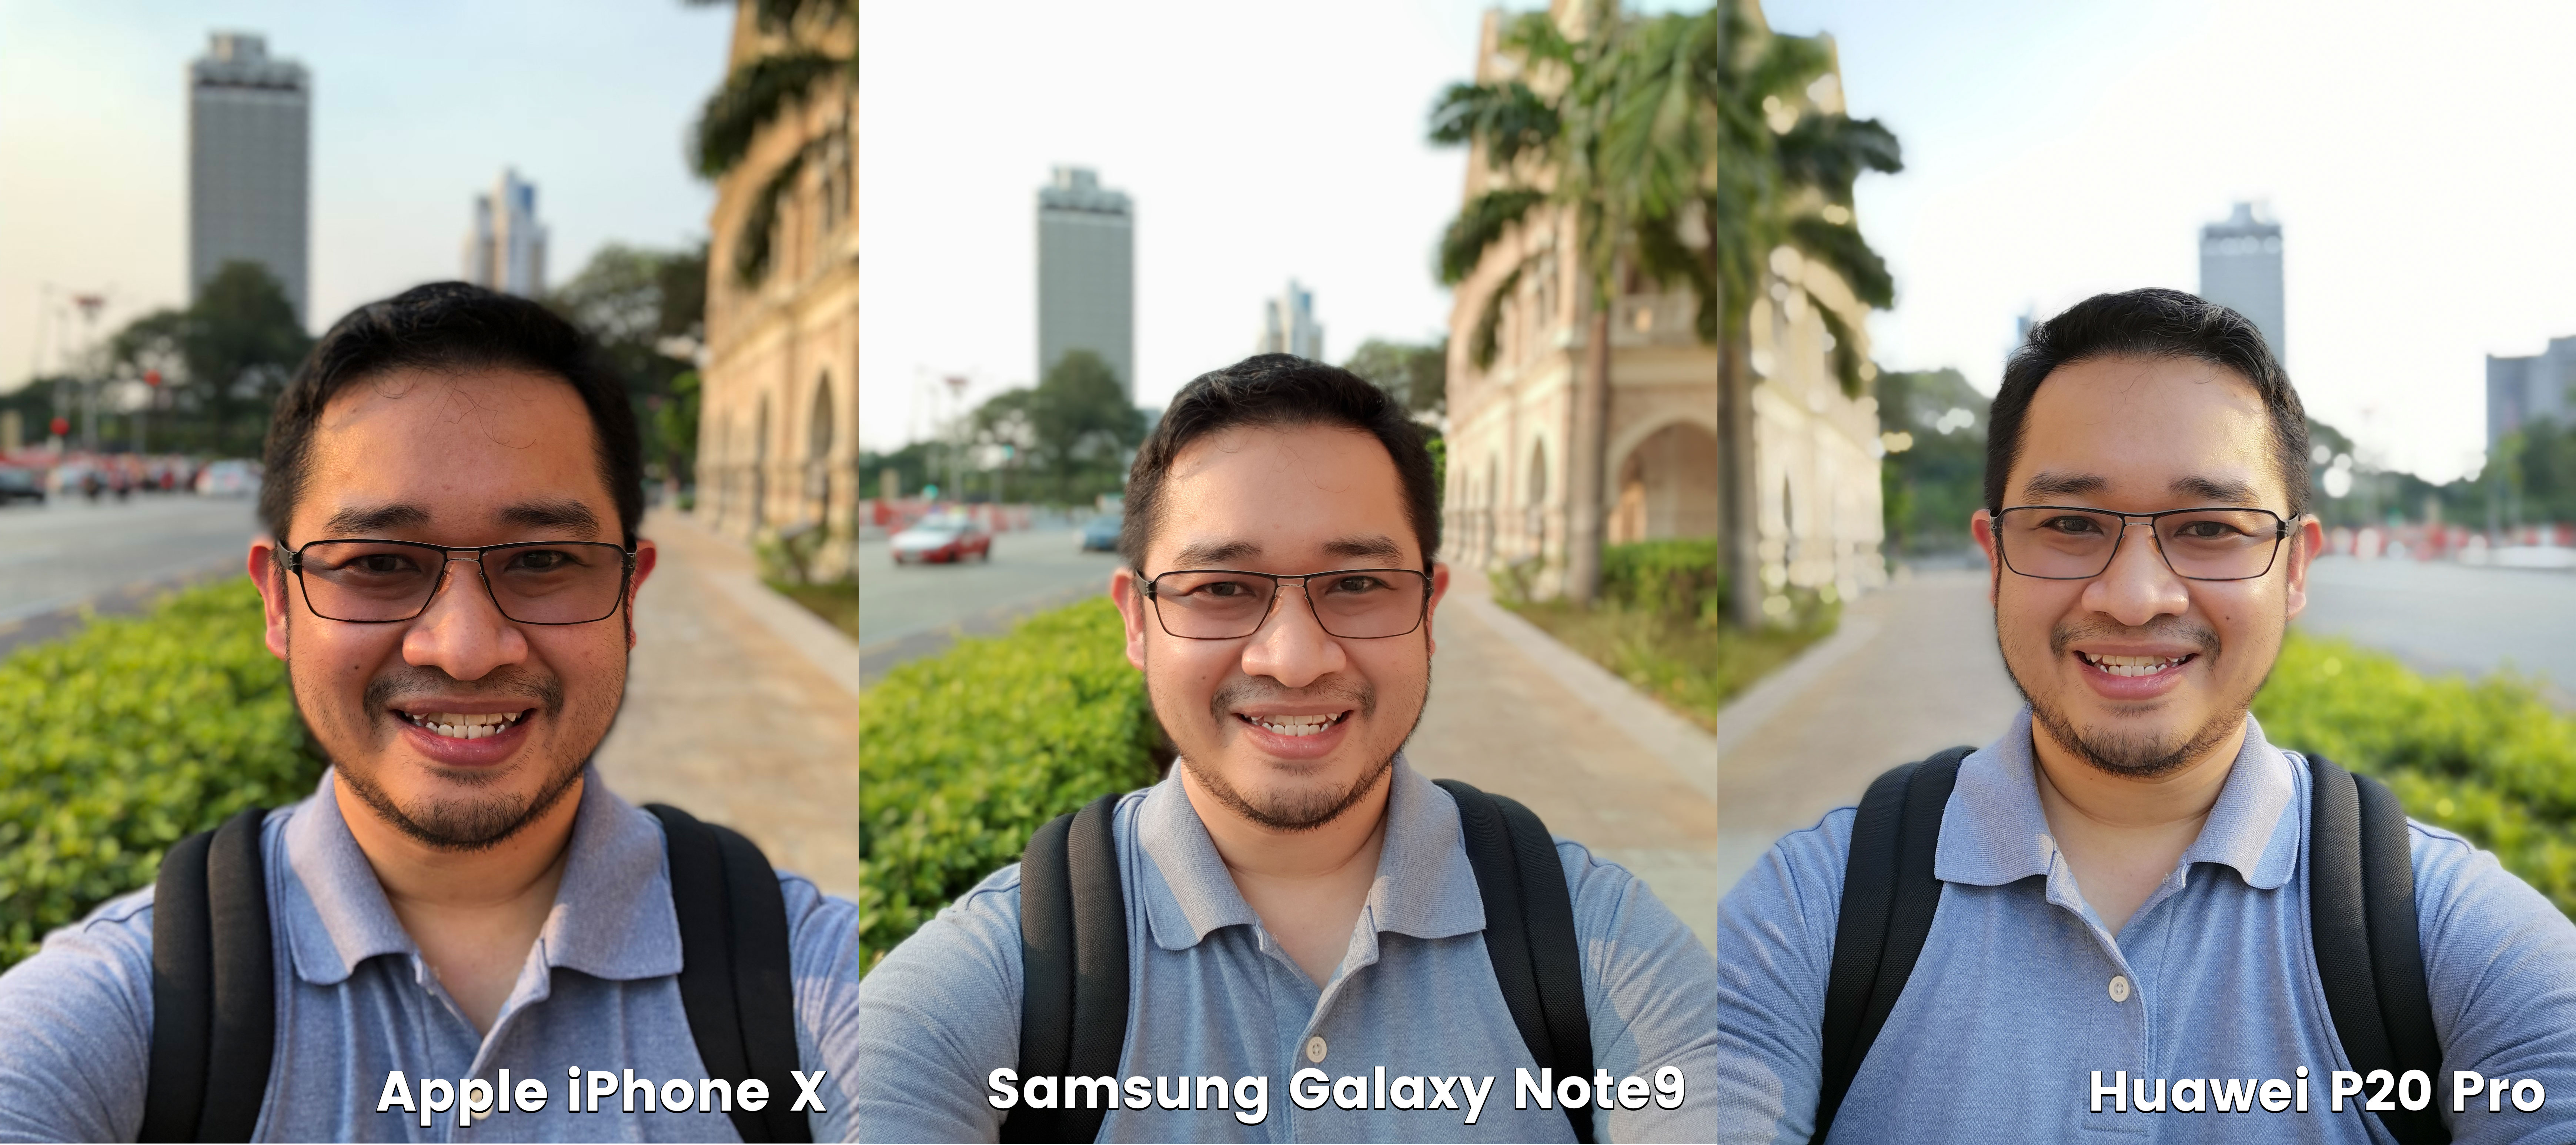 Сравнение камер realme. Samsung Galaxy s10 фронтальная камера. Samsung Galaxy Note 10 фронтальная камера. Honor 20 фронтальная камера. Huawei p20 Pro камера.